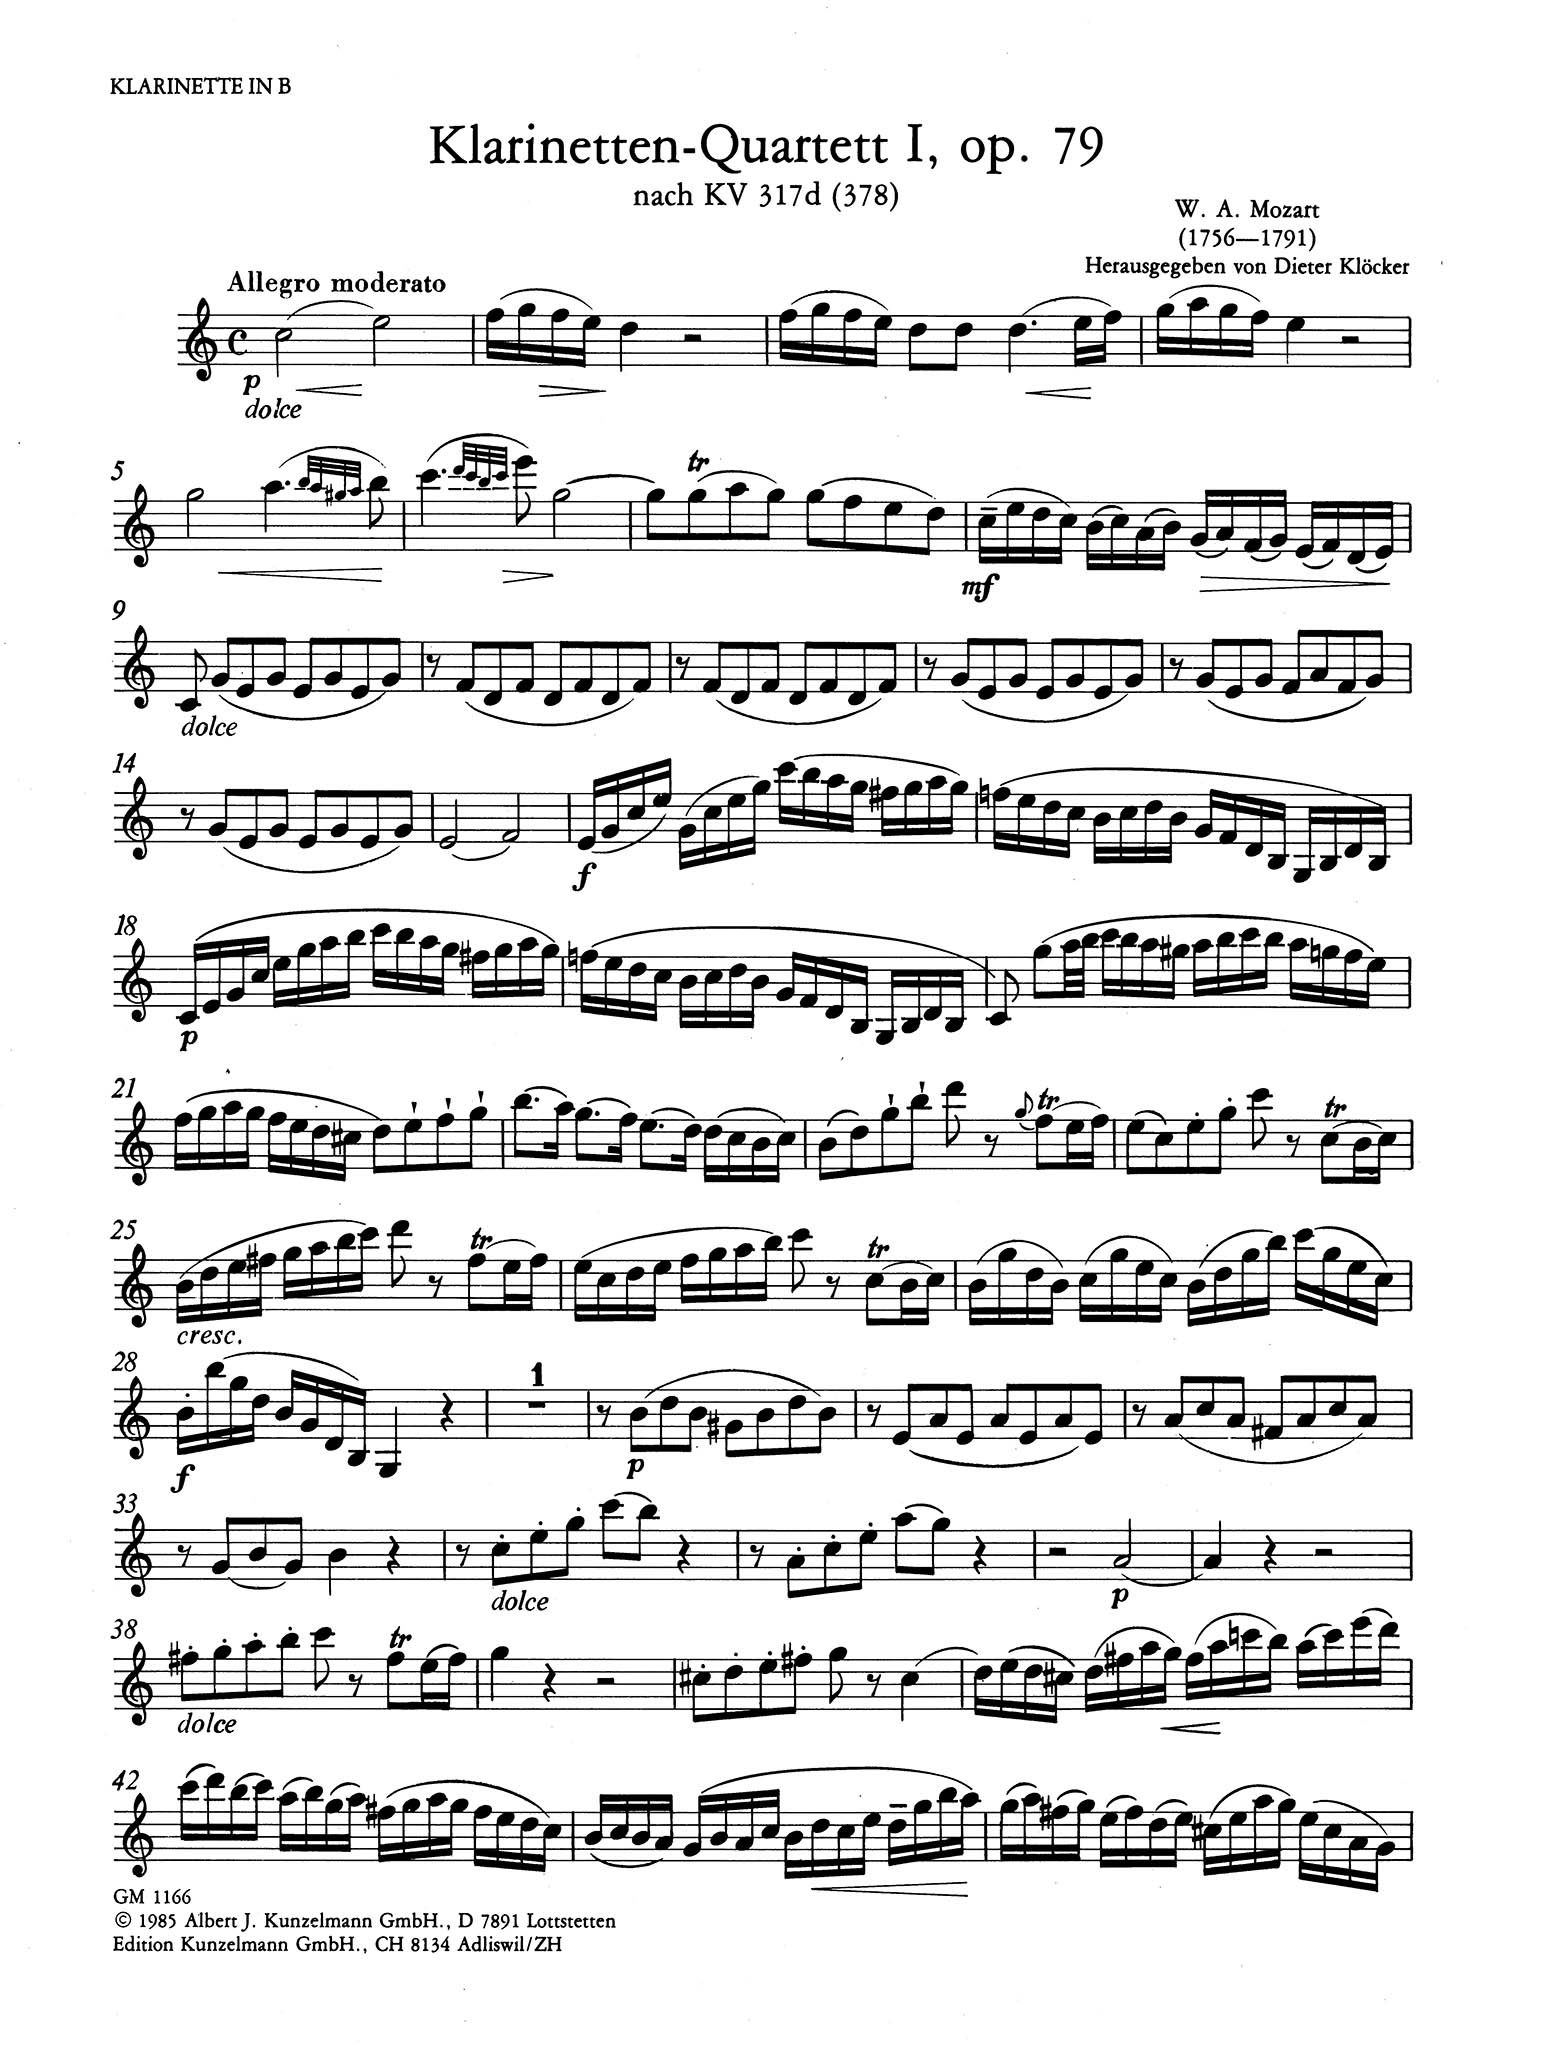 Violin Sonata No. 26 in B-Flat Major, K. 378/317d Clarinet part